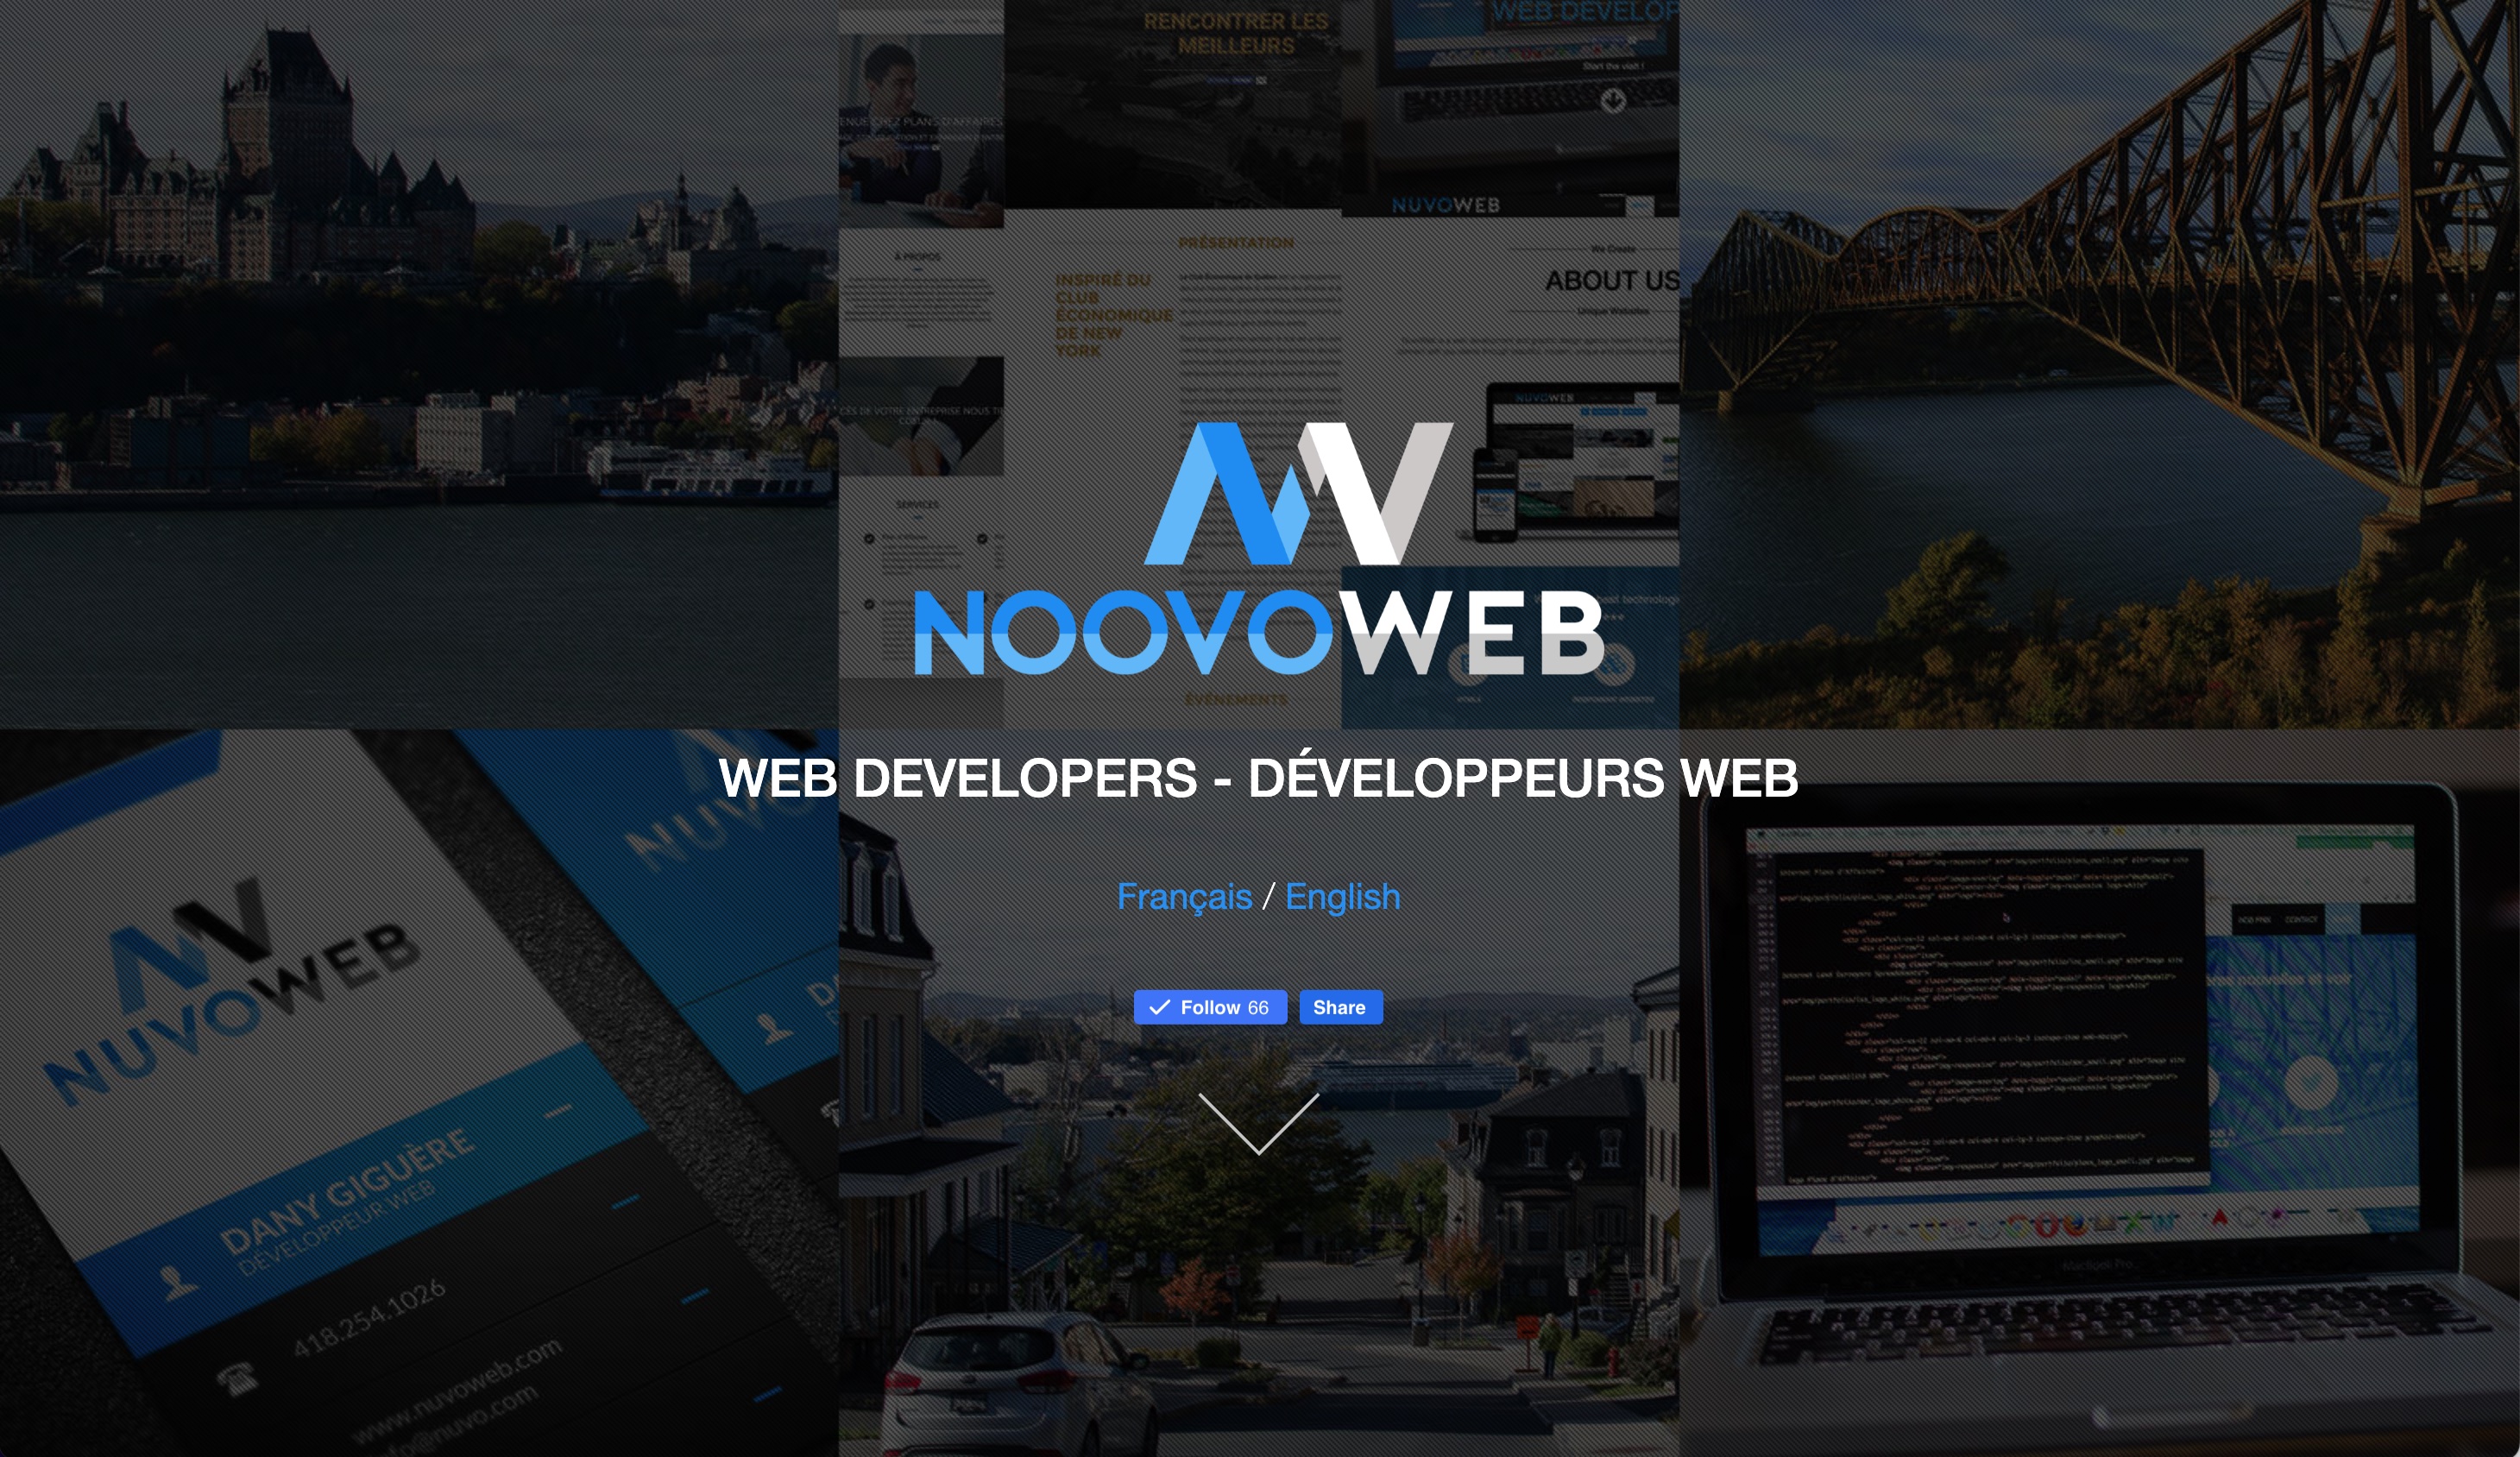 Noovoweb promotionnal image